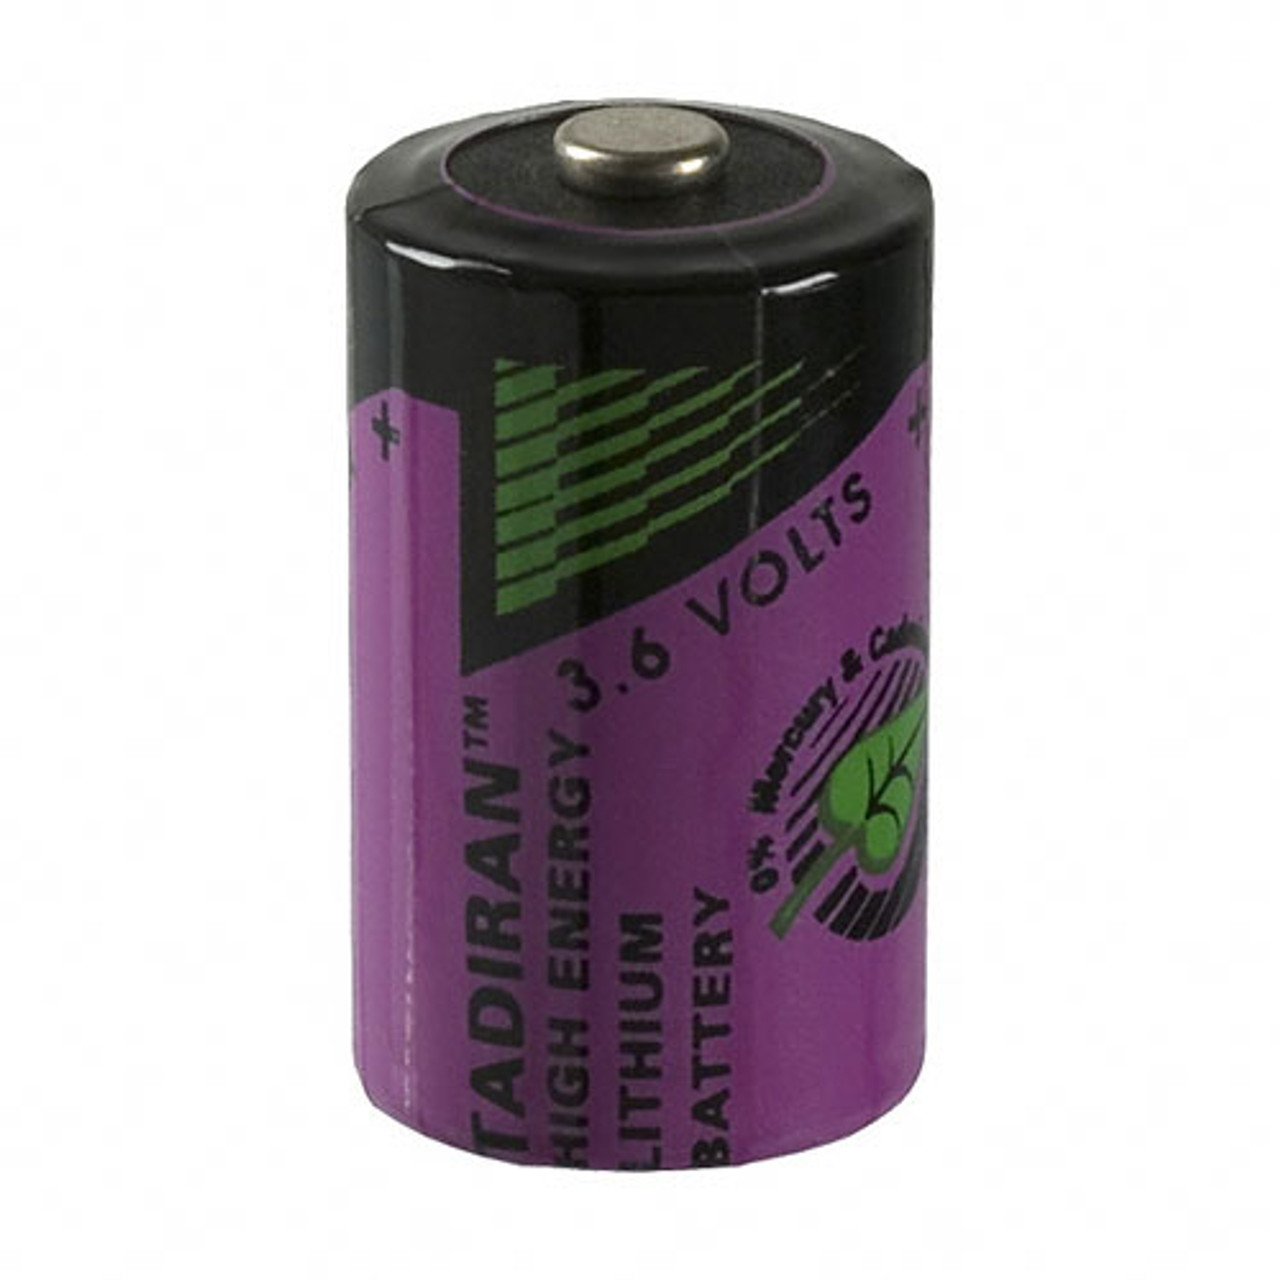 Battery 3.6 v. Батарейка Tadiran SL-750/S 3.6V 1/2aa 14250. Tadiran батарейки TL-2150 3.6V. Батарейка литиевая 1/2aa-3.6v. Батарея Tadiran sl750/s 3,6v/1,1ah 1/2aa.